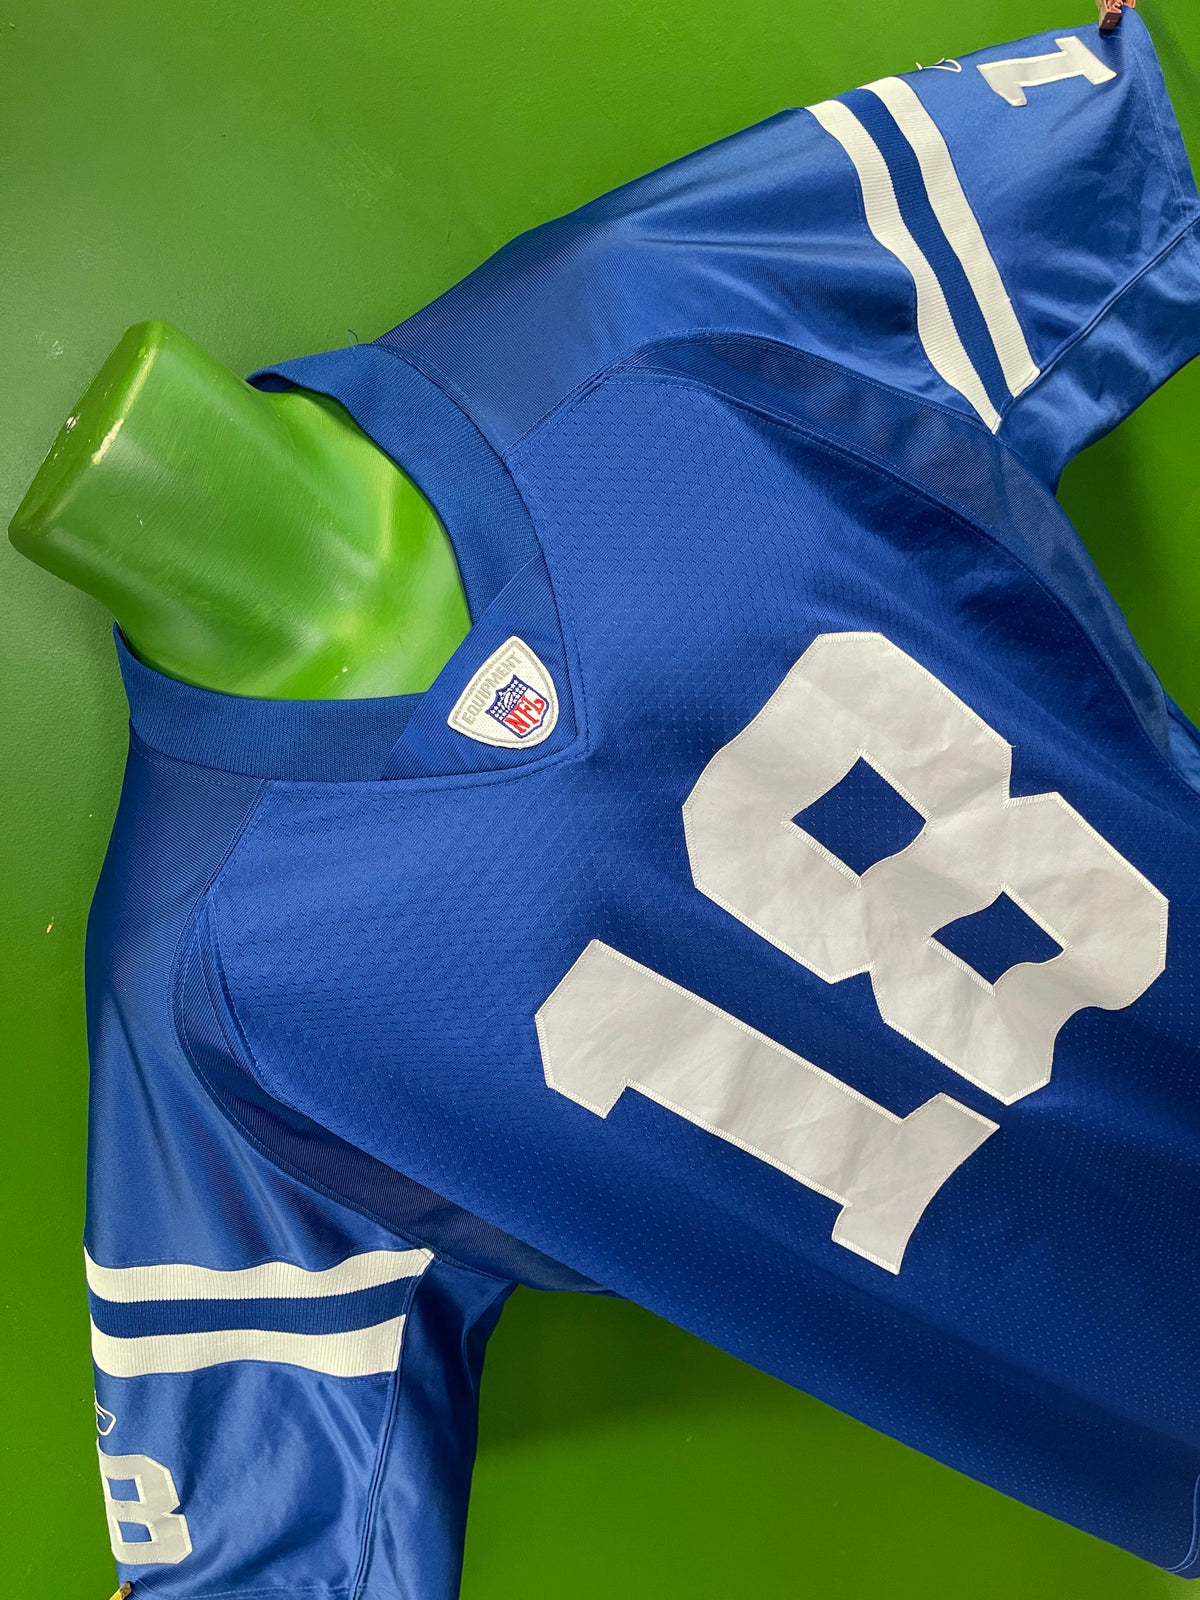 NFL Indianapolis Colts Peyton Manning #18 Reebok Stitched Jersey Men's 2X-Large